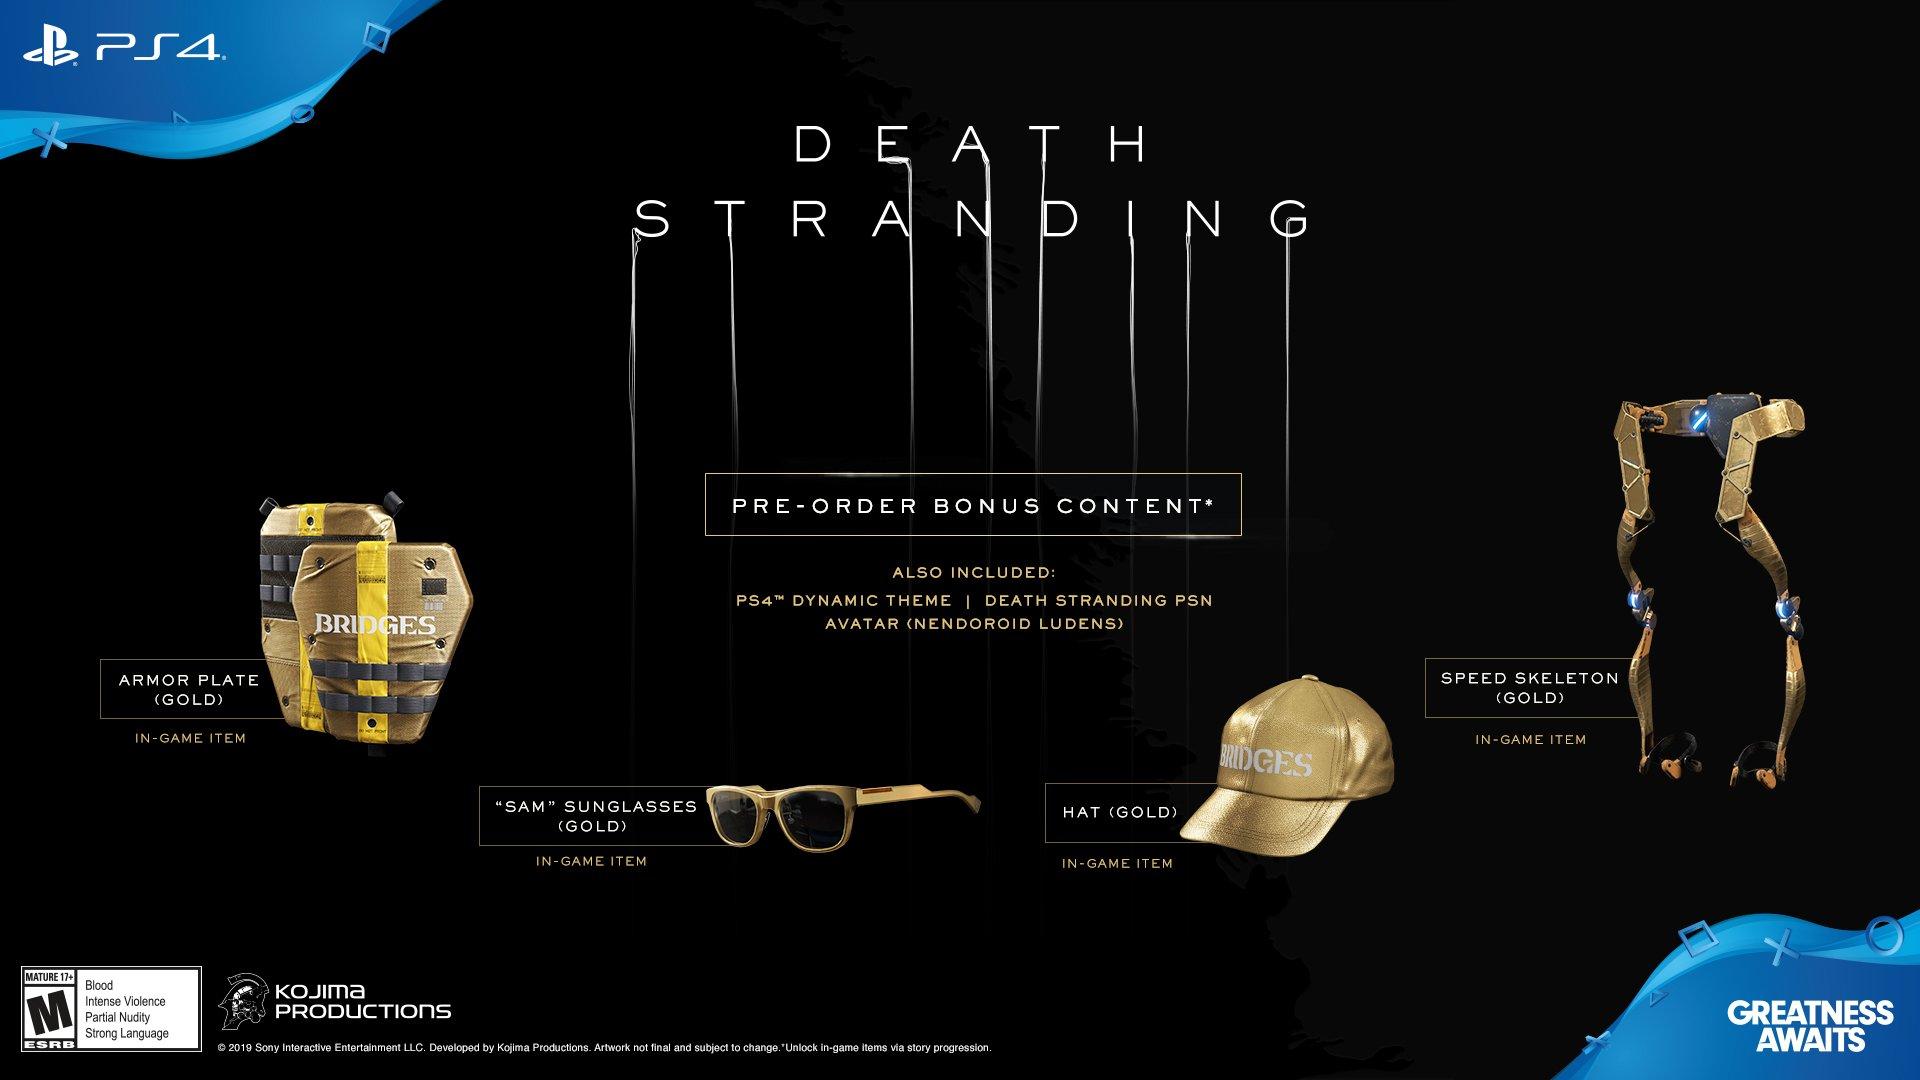 death stranding collector's edition amazon